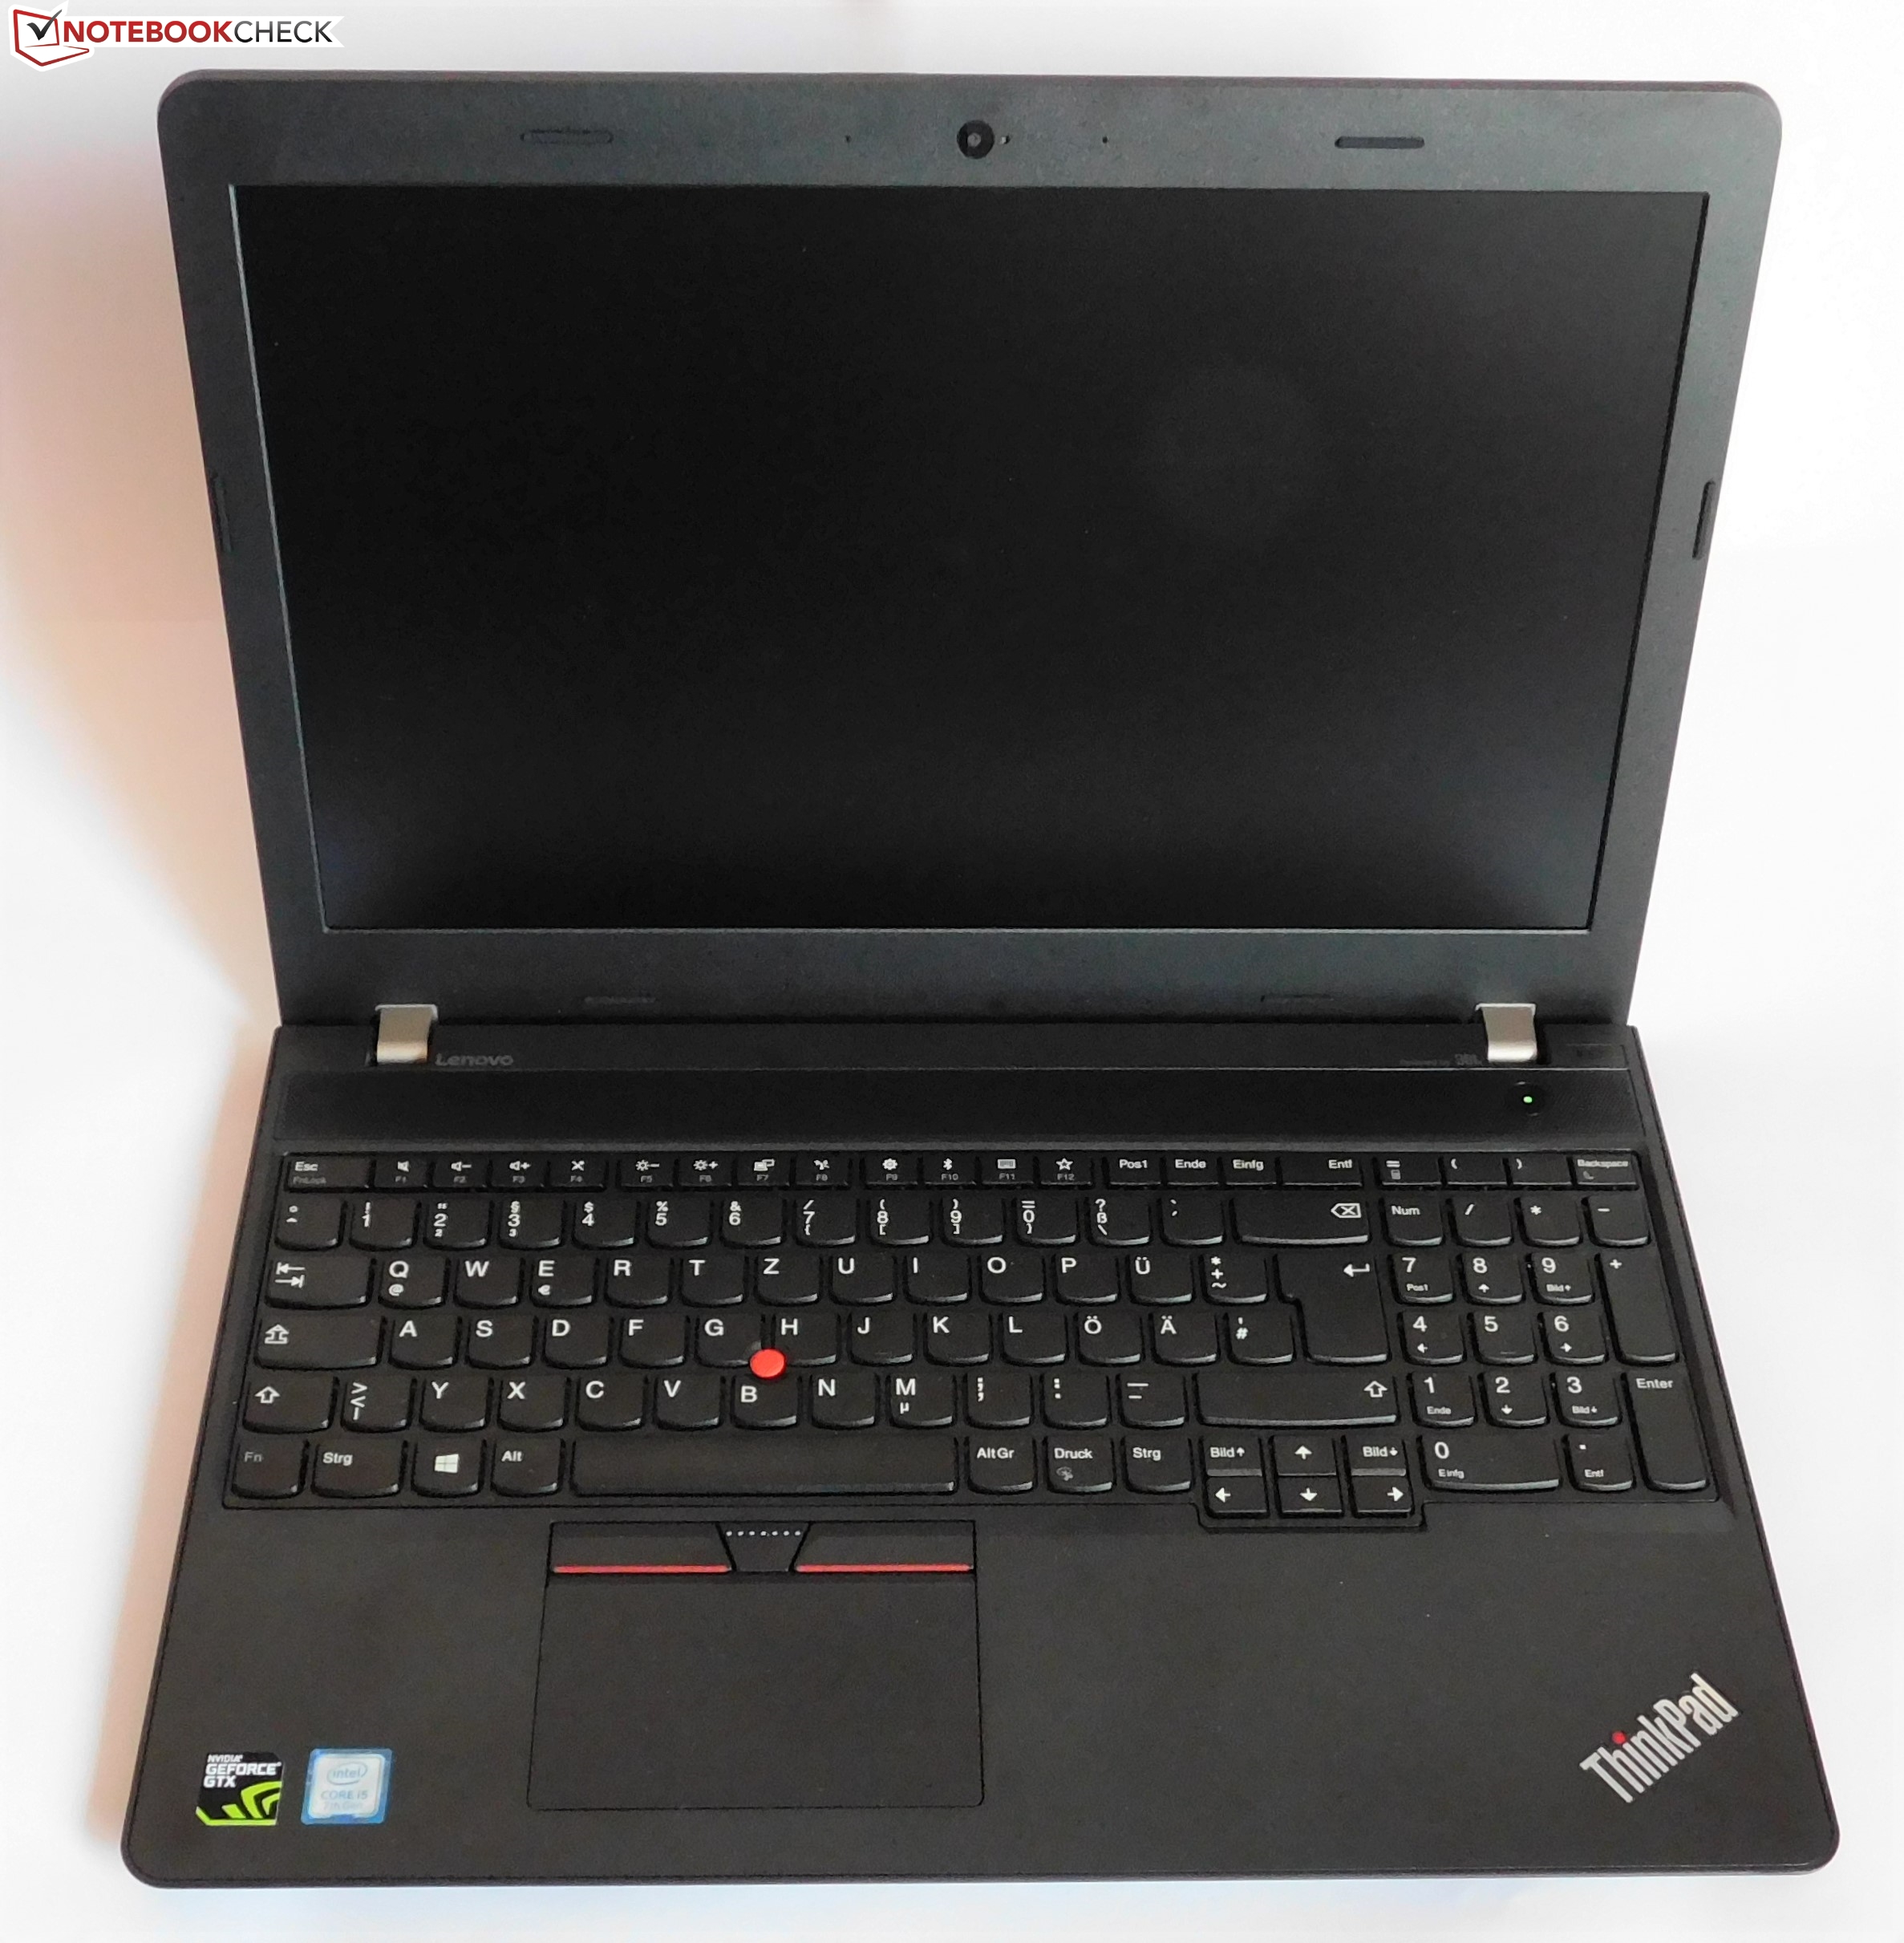 Lenovo ThinkPad E570 (Core i5, GTX 950M) Notebook Review 